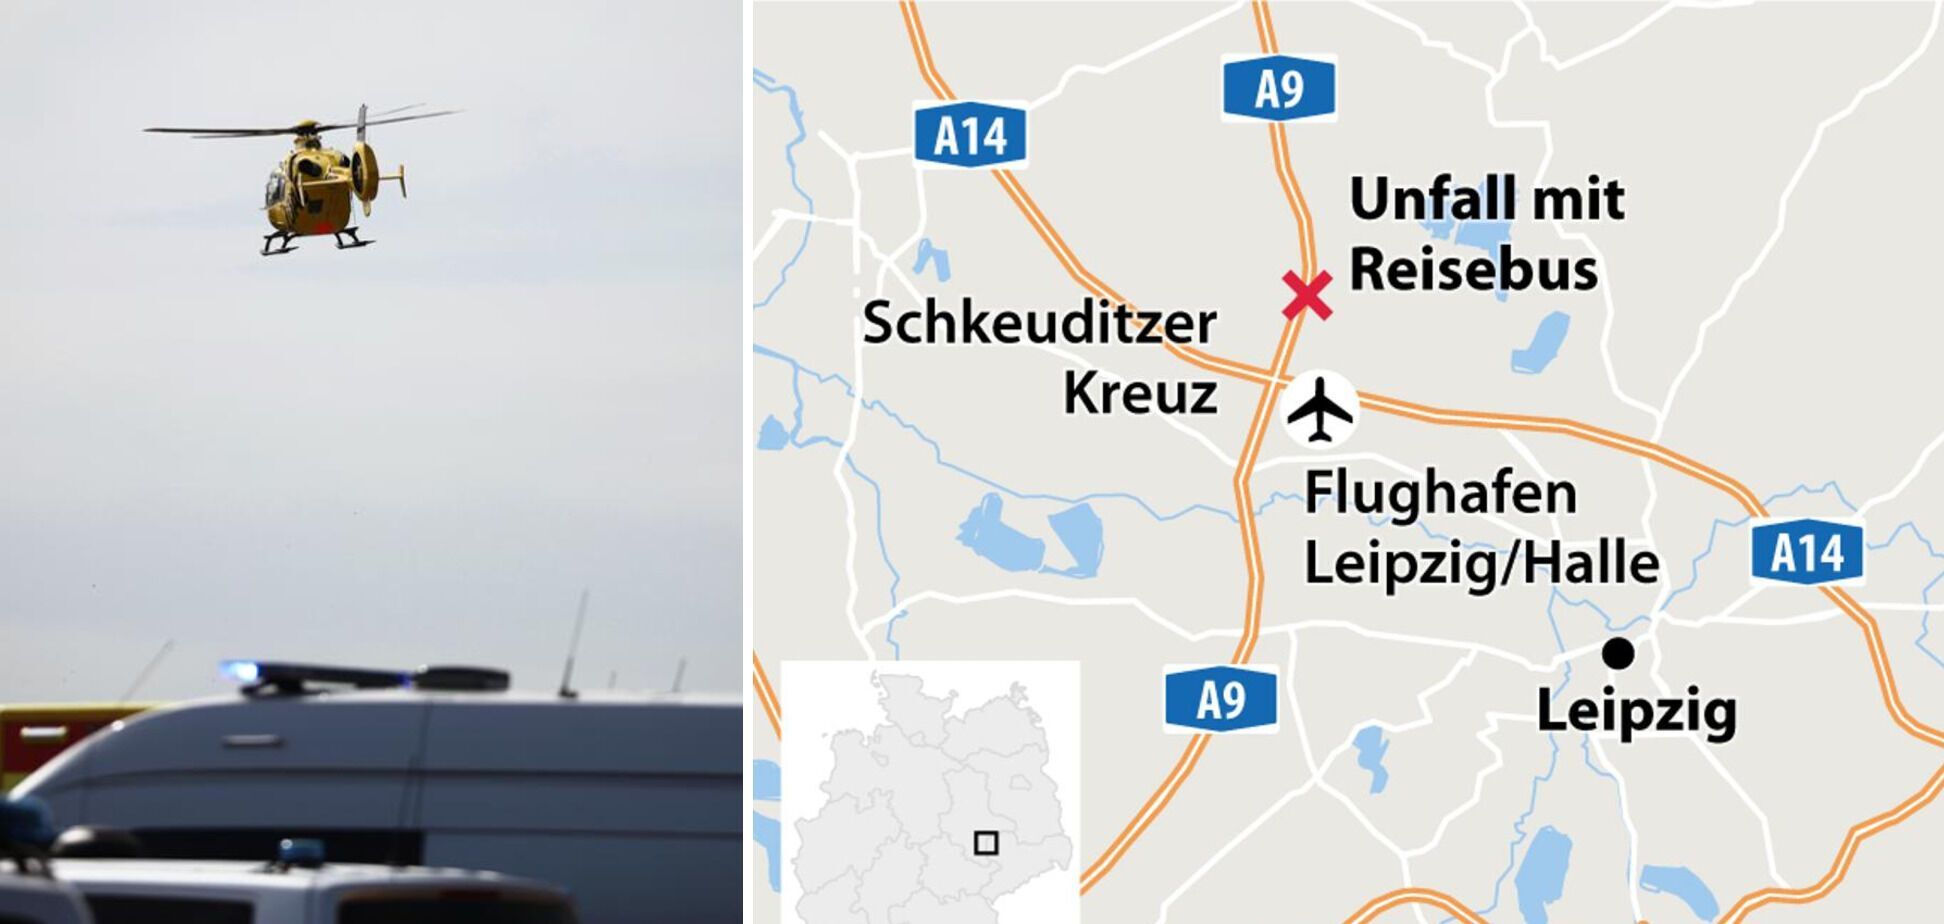 У Німеччині в смертельну ДТП потрапив автобус Flixbus: серед постраждалих – українки. Фото xdideeieuidduant